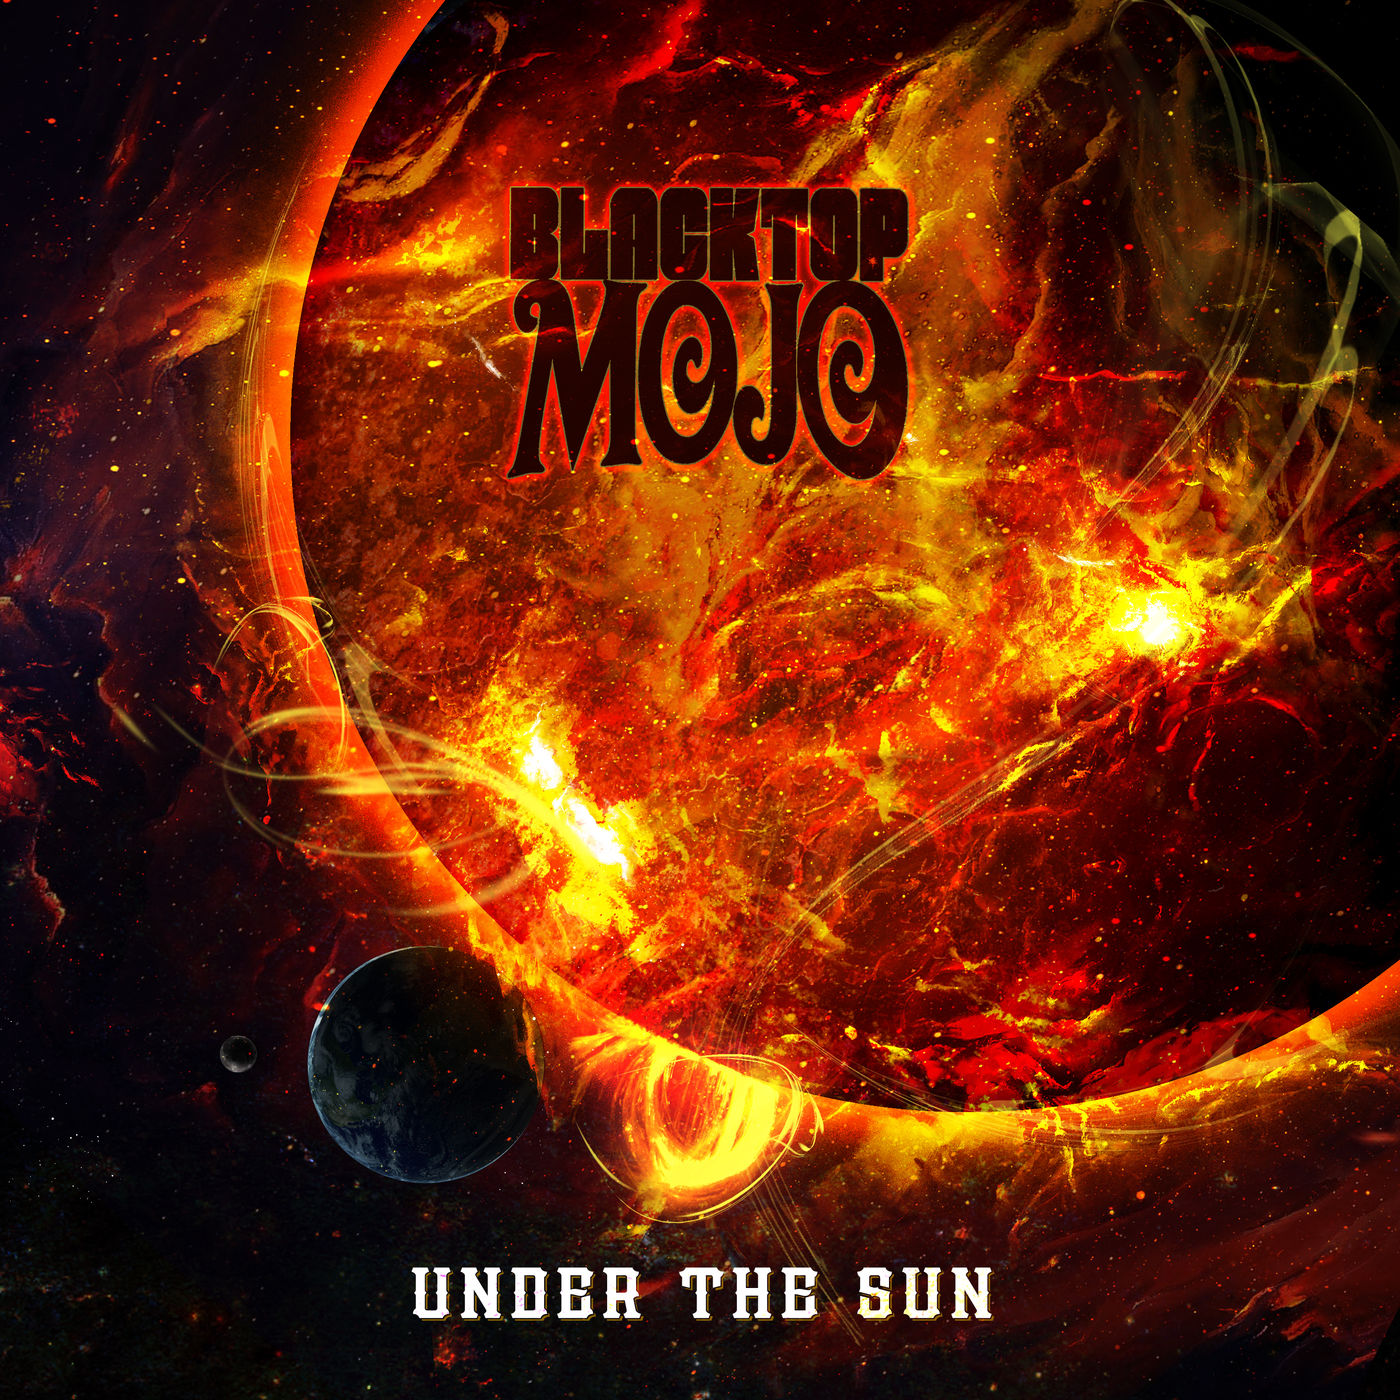 Blacktop Mojo - Under the Sun (2019)